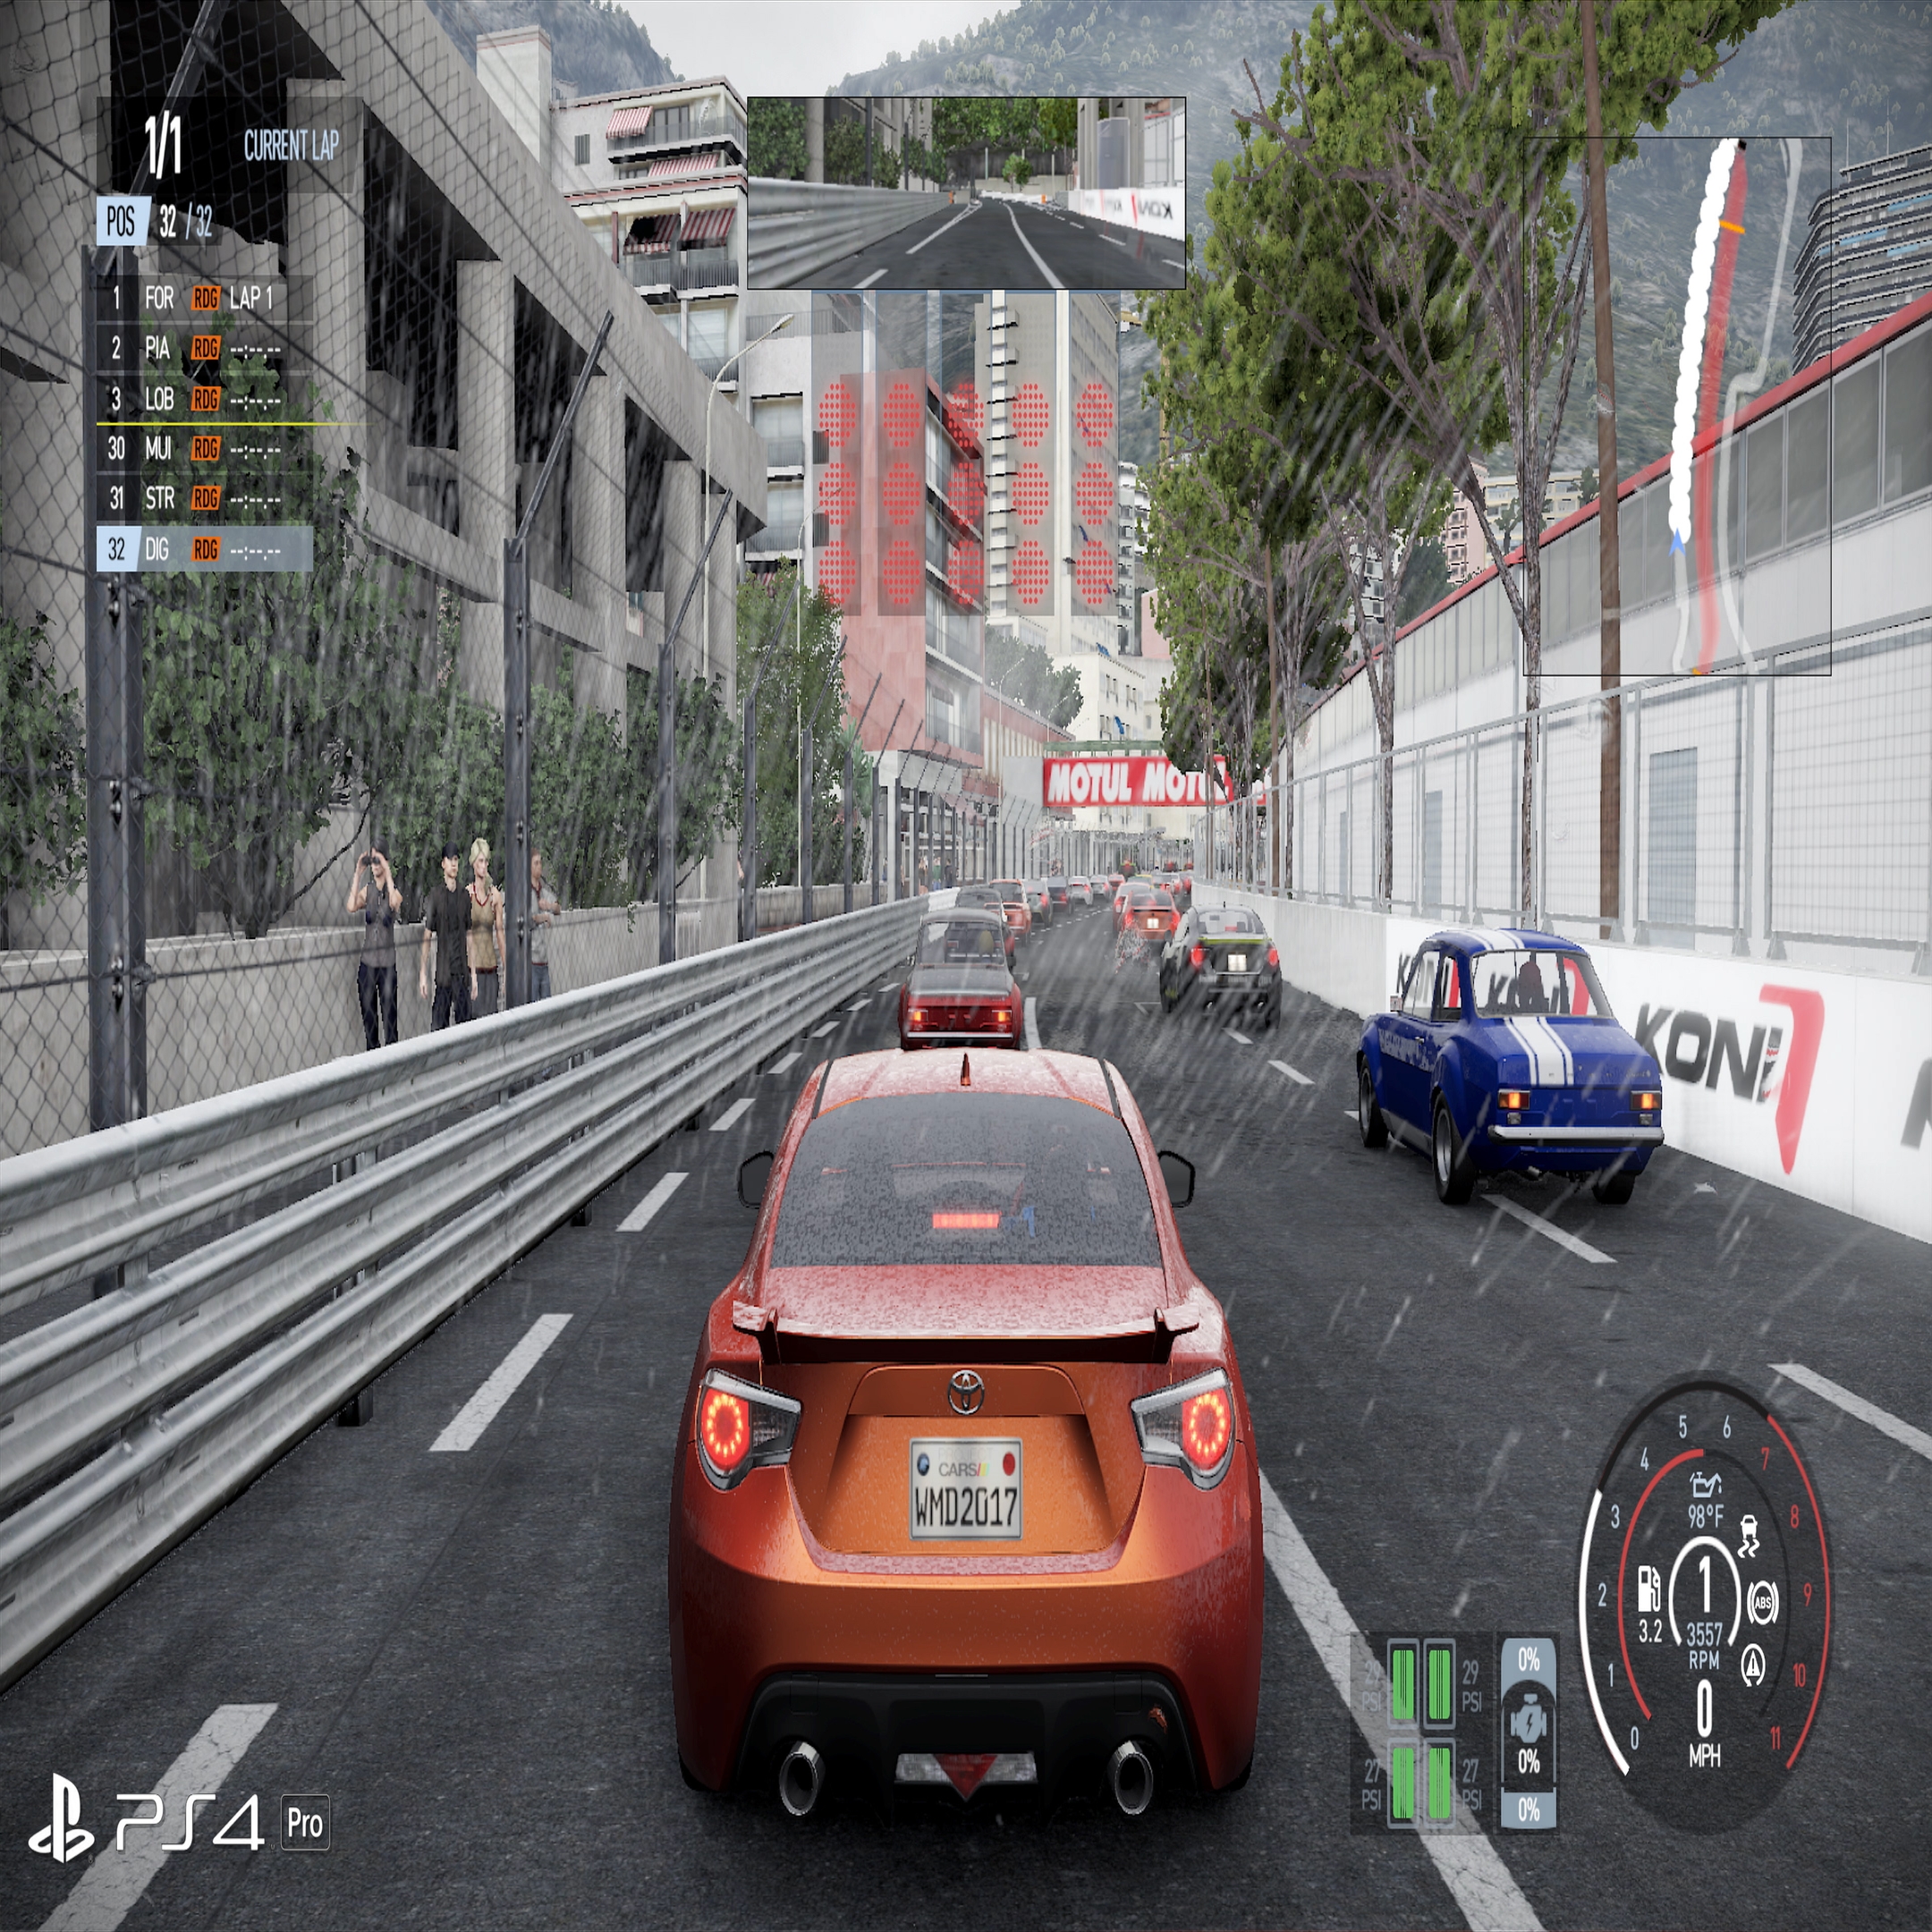 Project Cars 2 runs best on 4 Pro Eurogamer.net